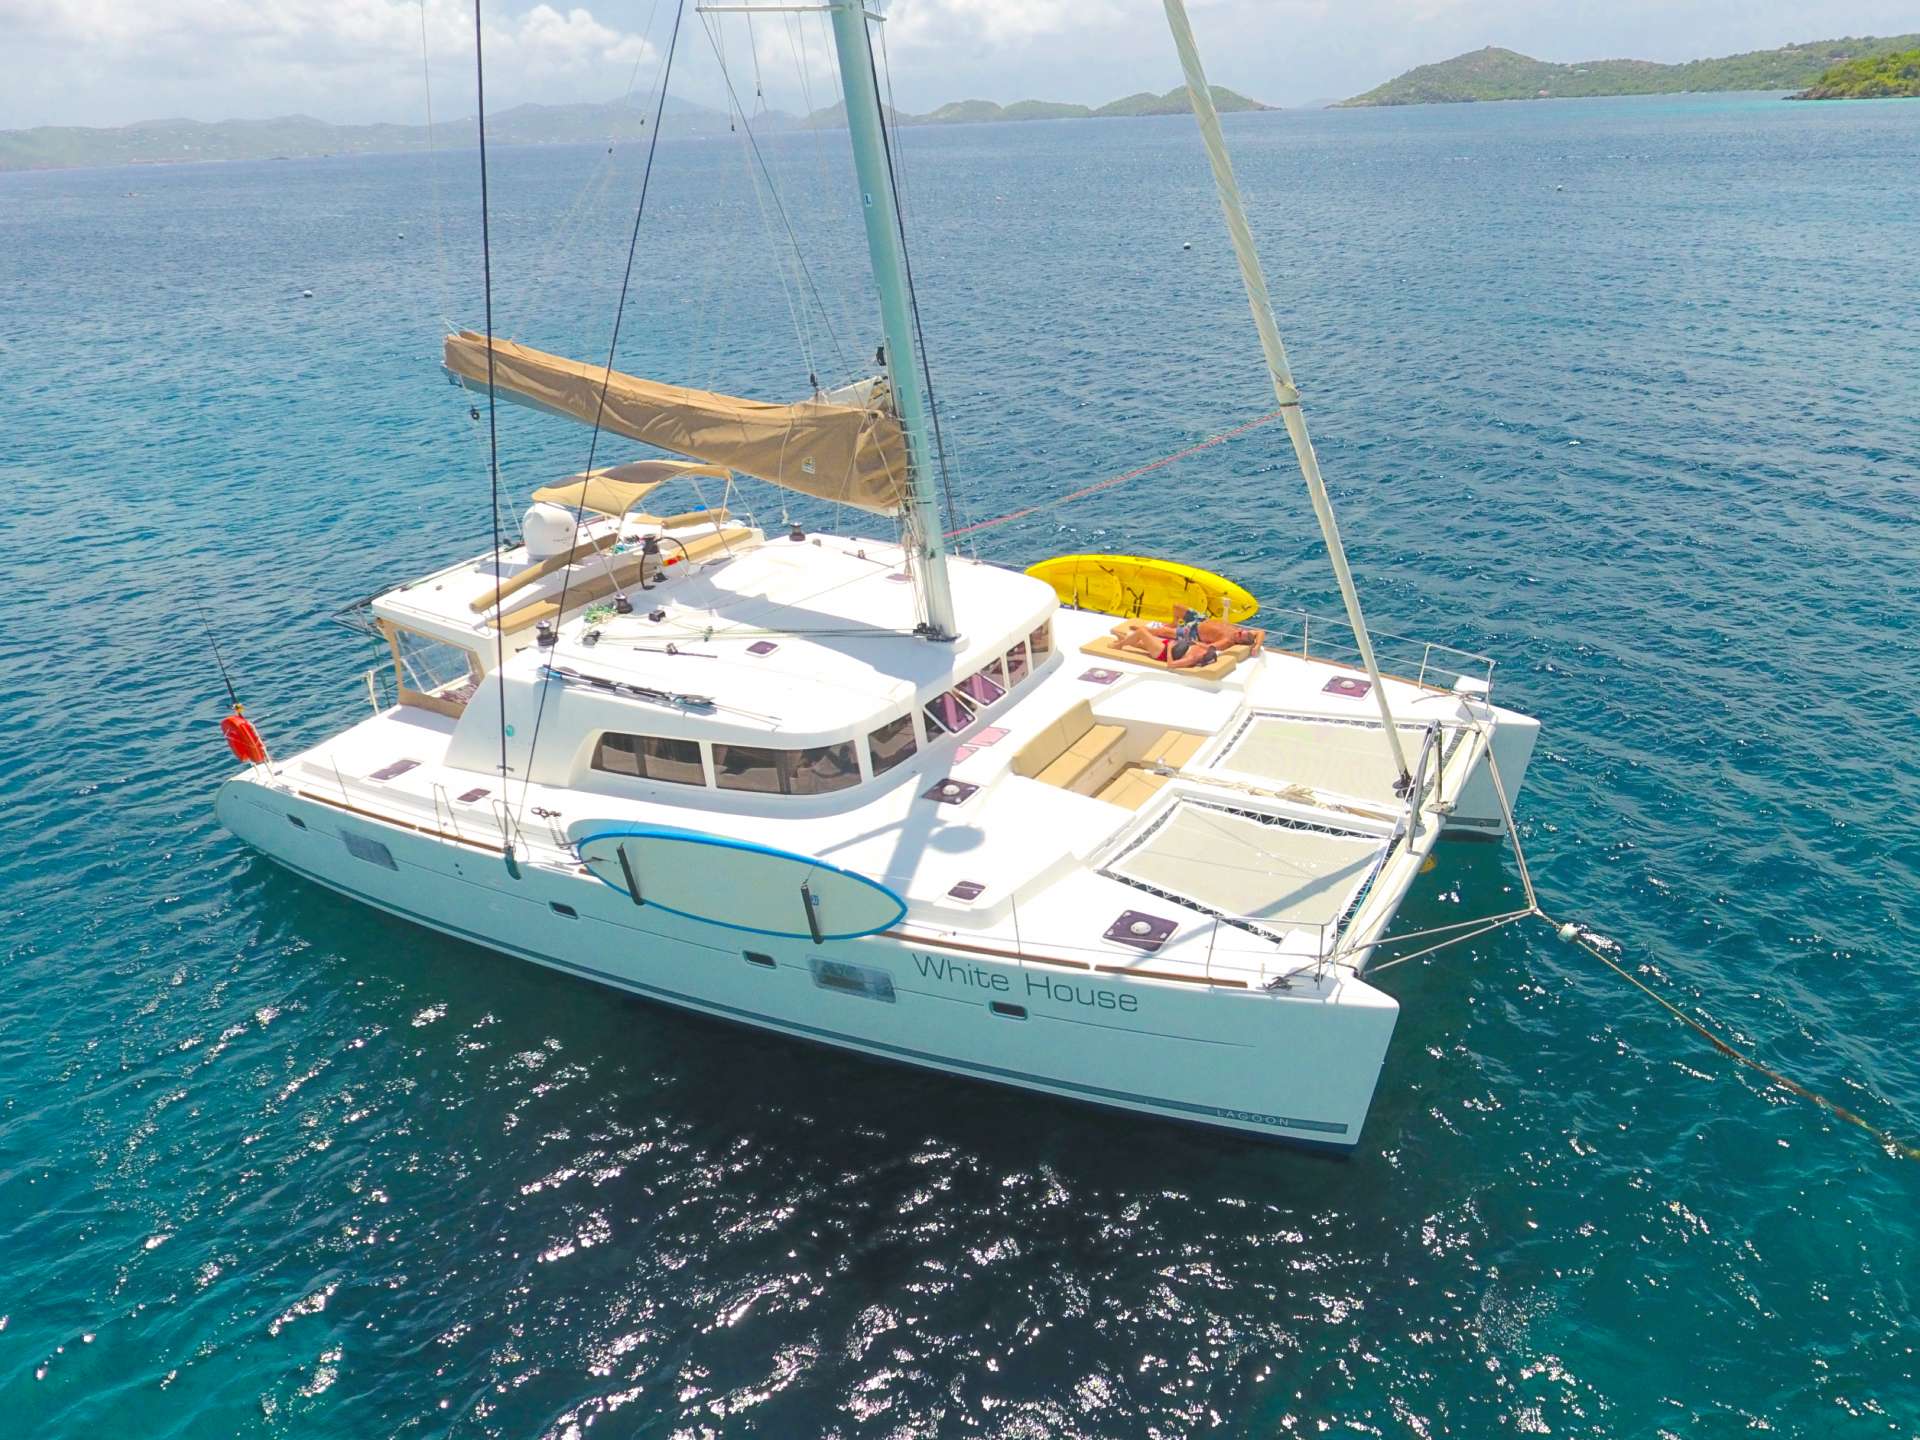 WHITE HOUSE: 50' Catamaran - All Inclusive Crewed Yacht Charter